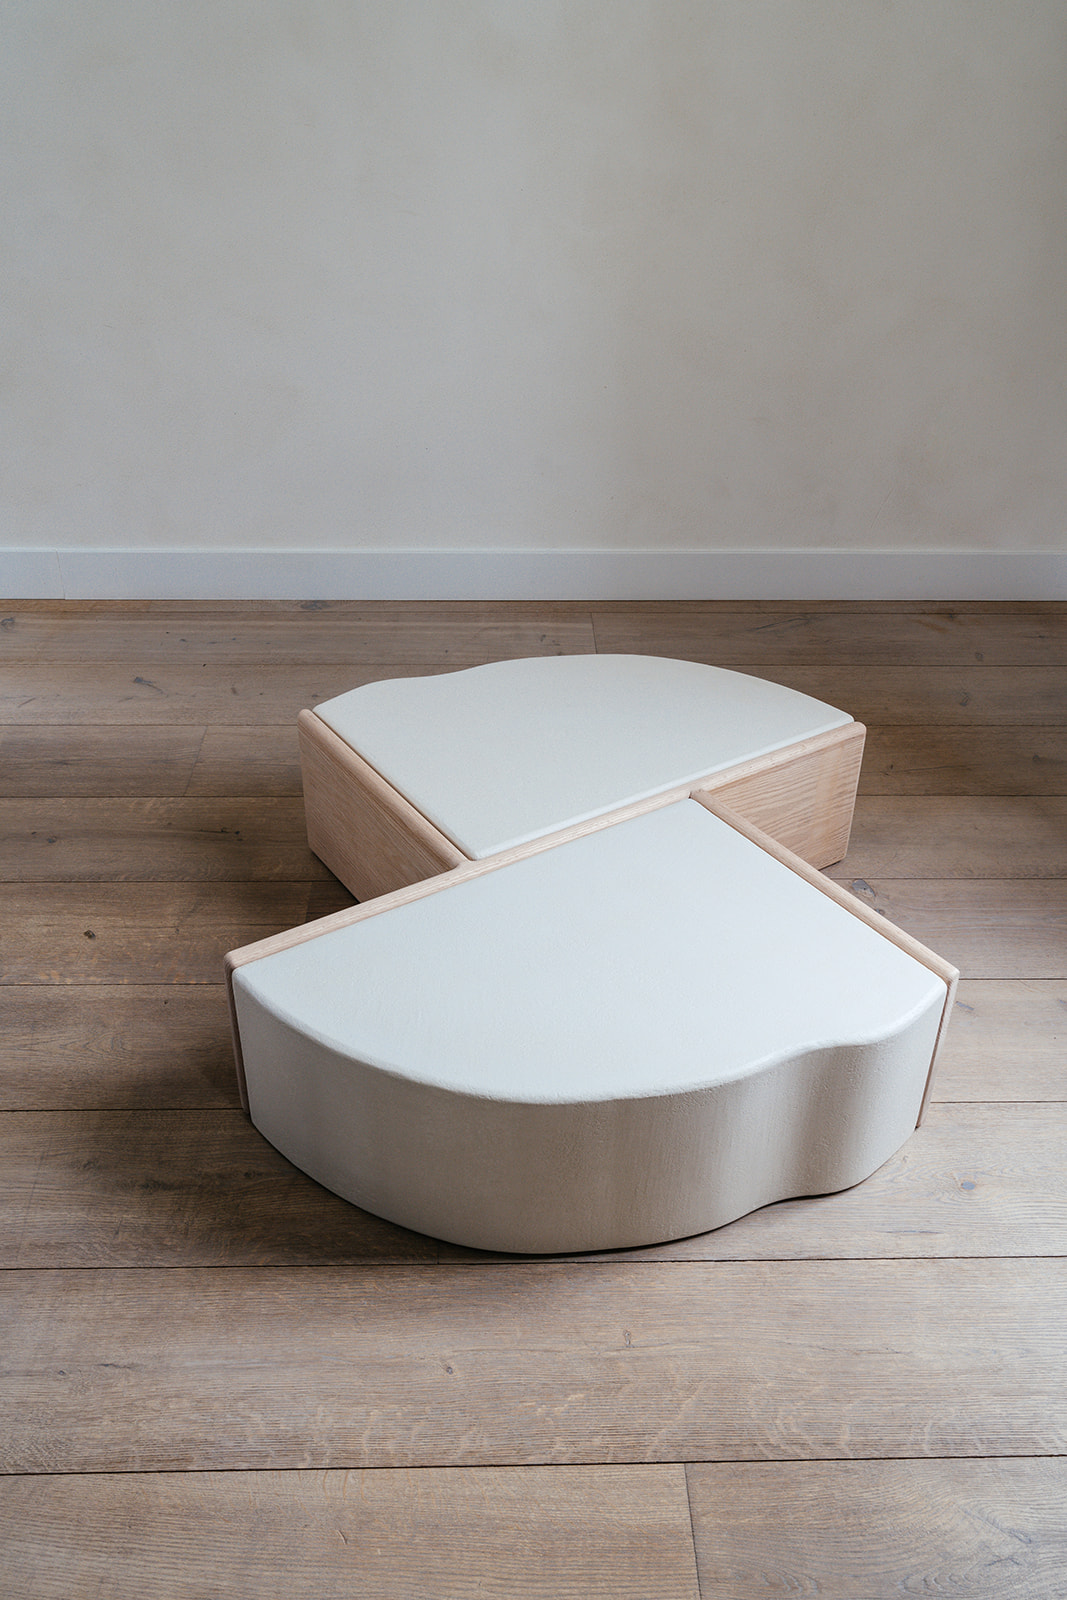 FLINT GRID ROUND design coffee table